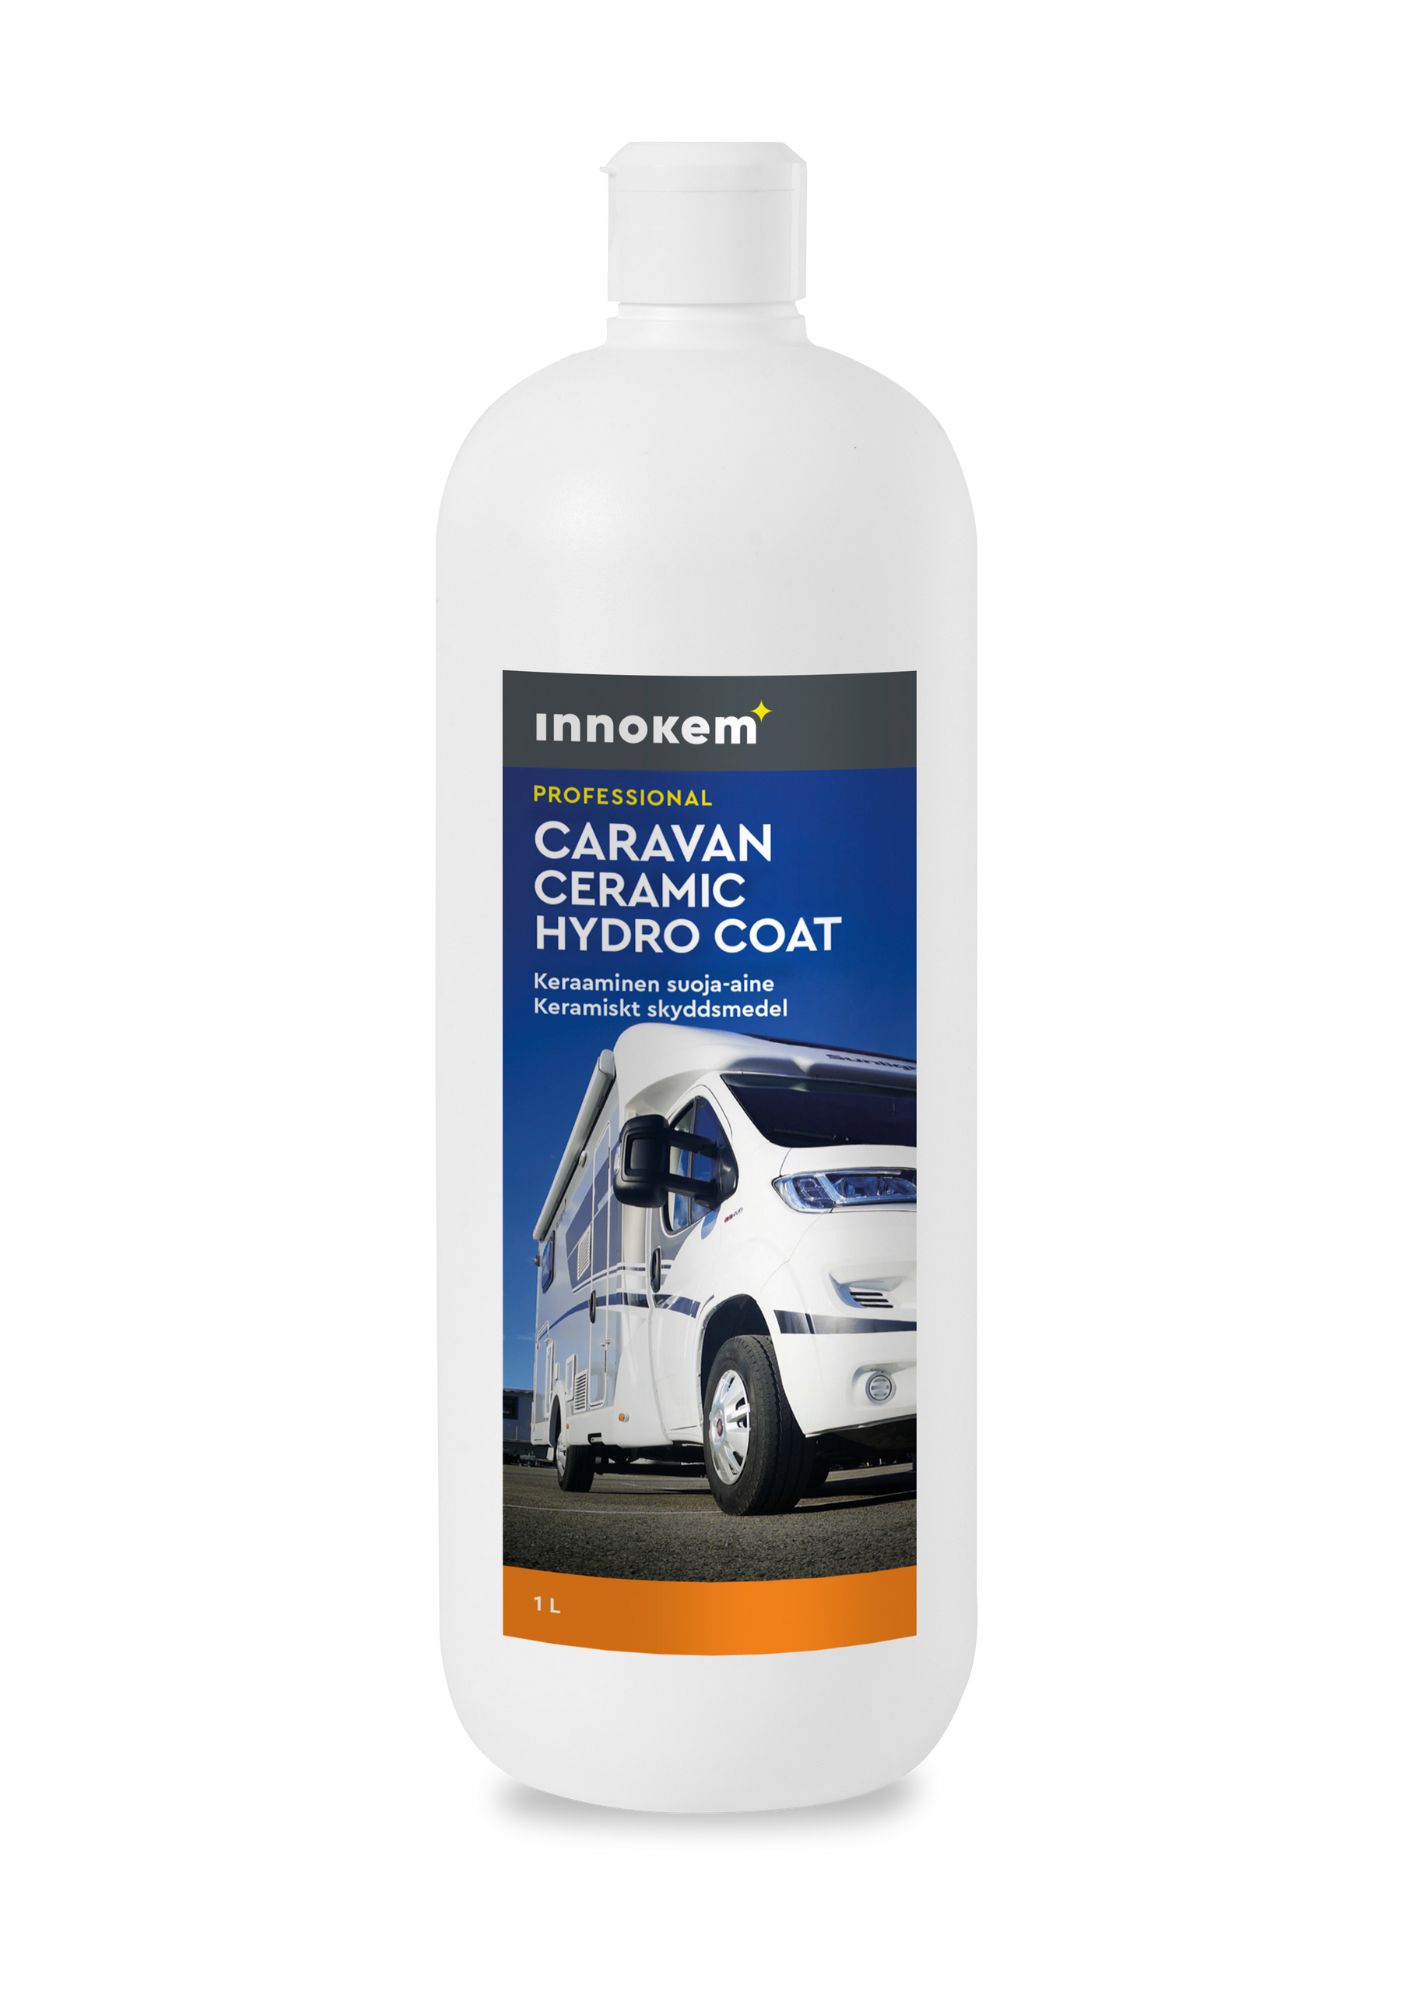 innokem caravan ceramic hydro coating 1l